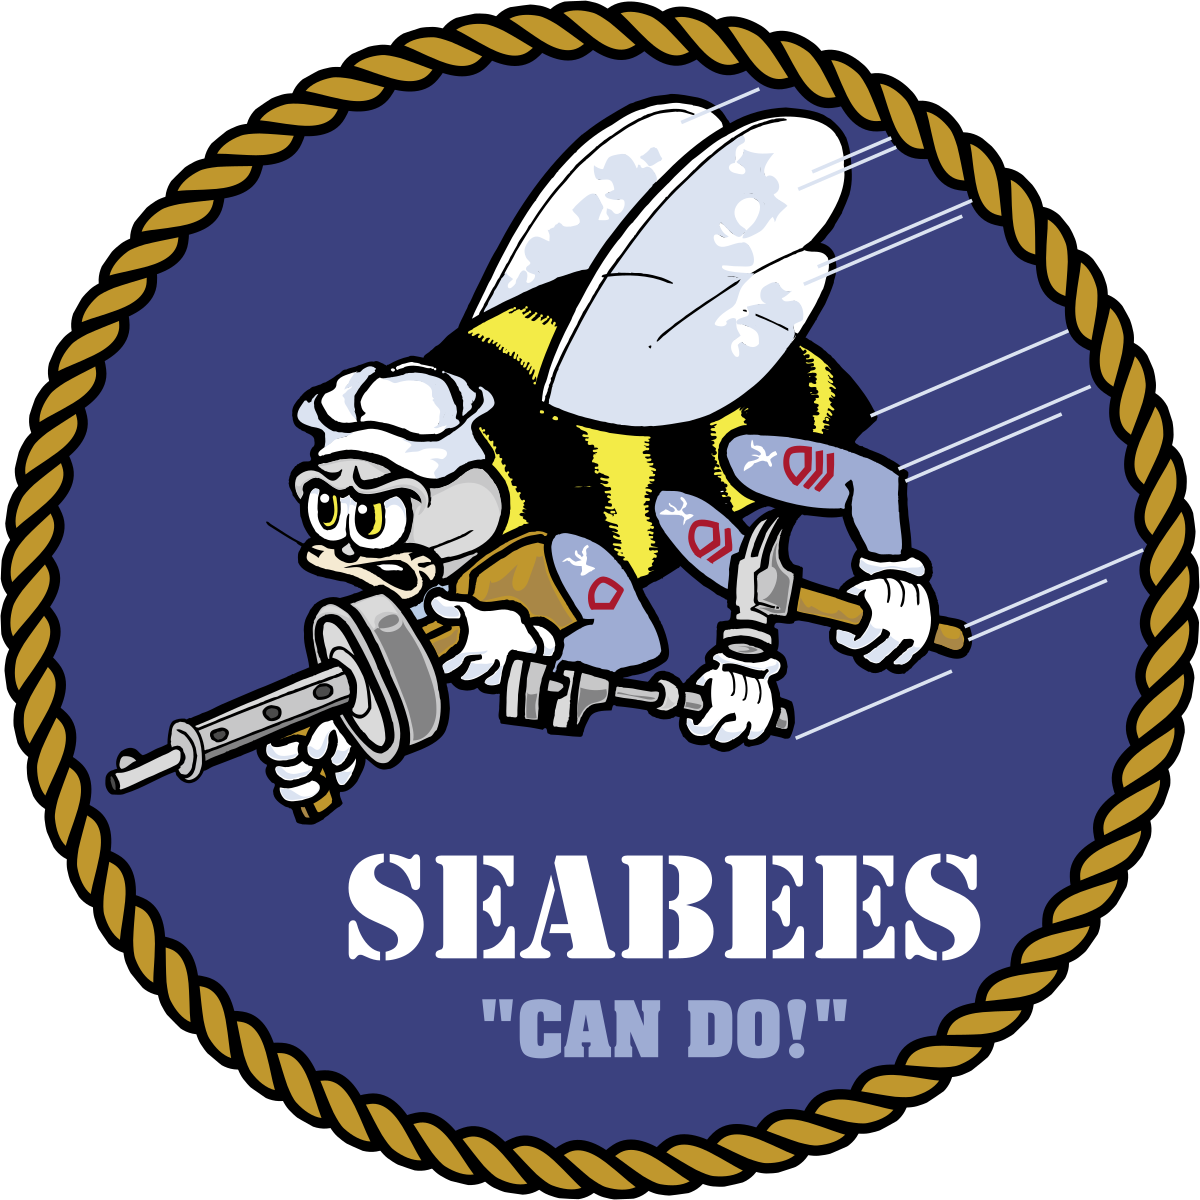 Sailor clipart navy seals. Seabee wikipedia 